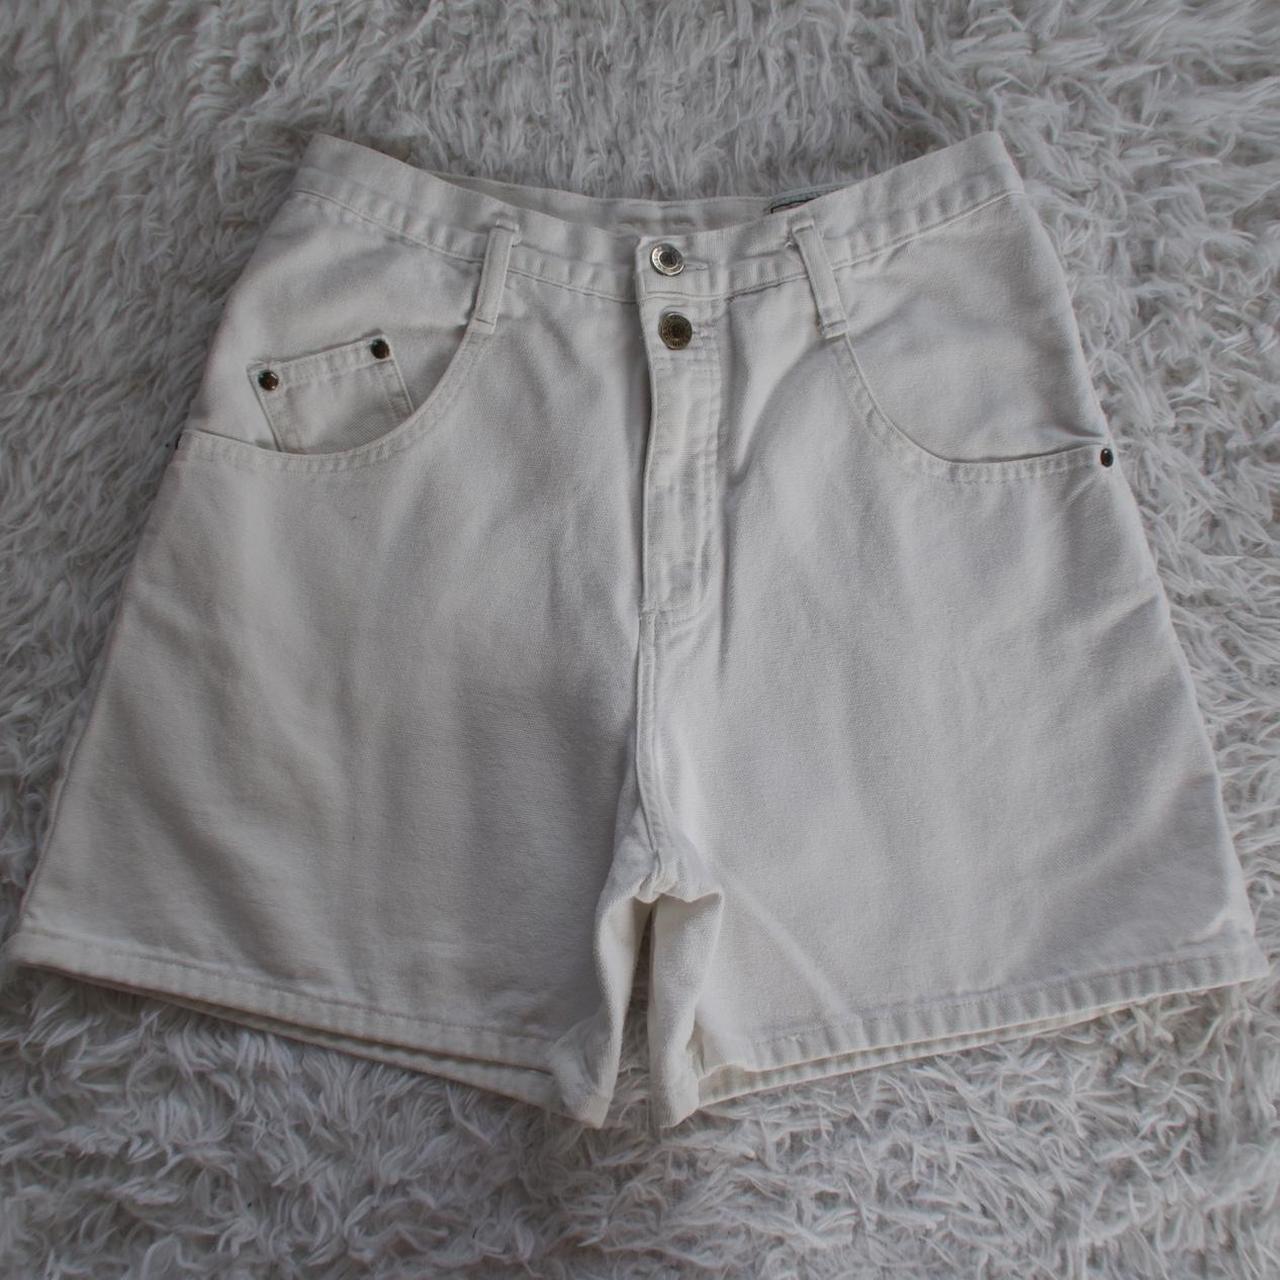 pilling white has jean vintage Depop throughout... - shorts!